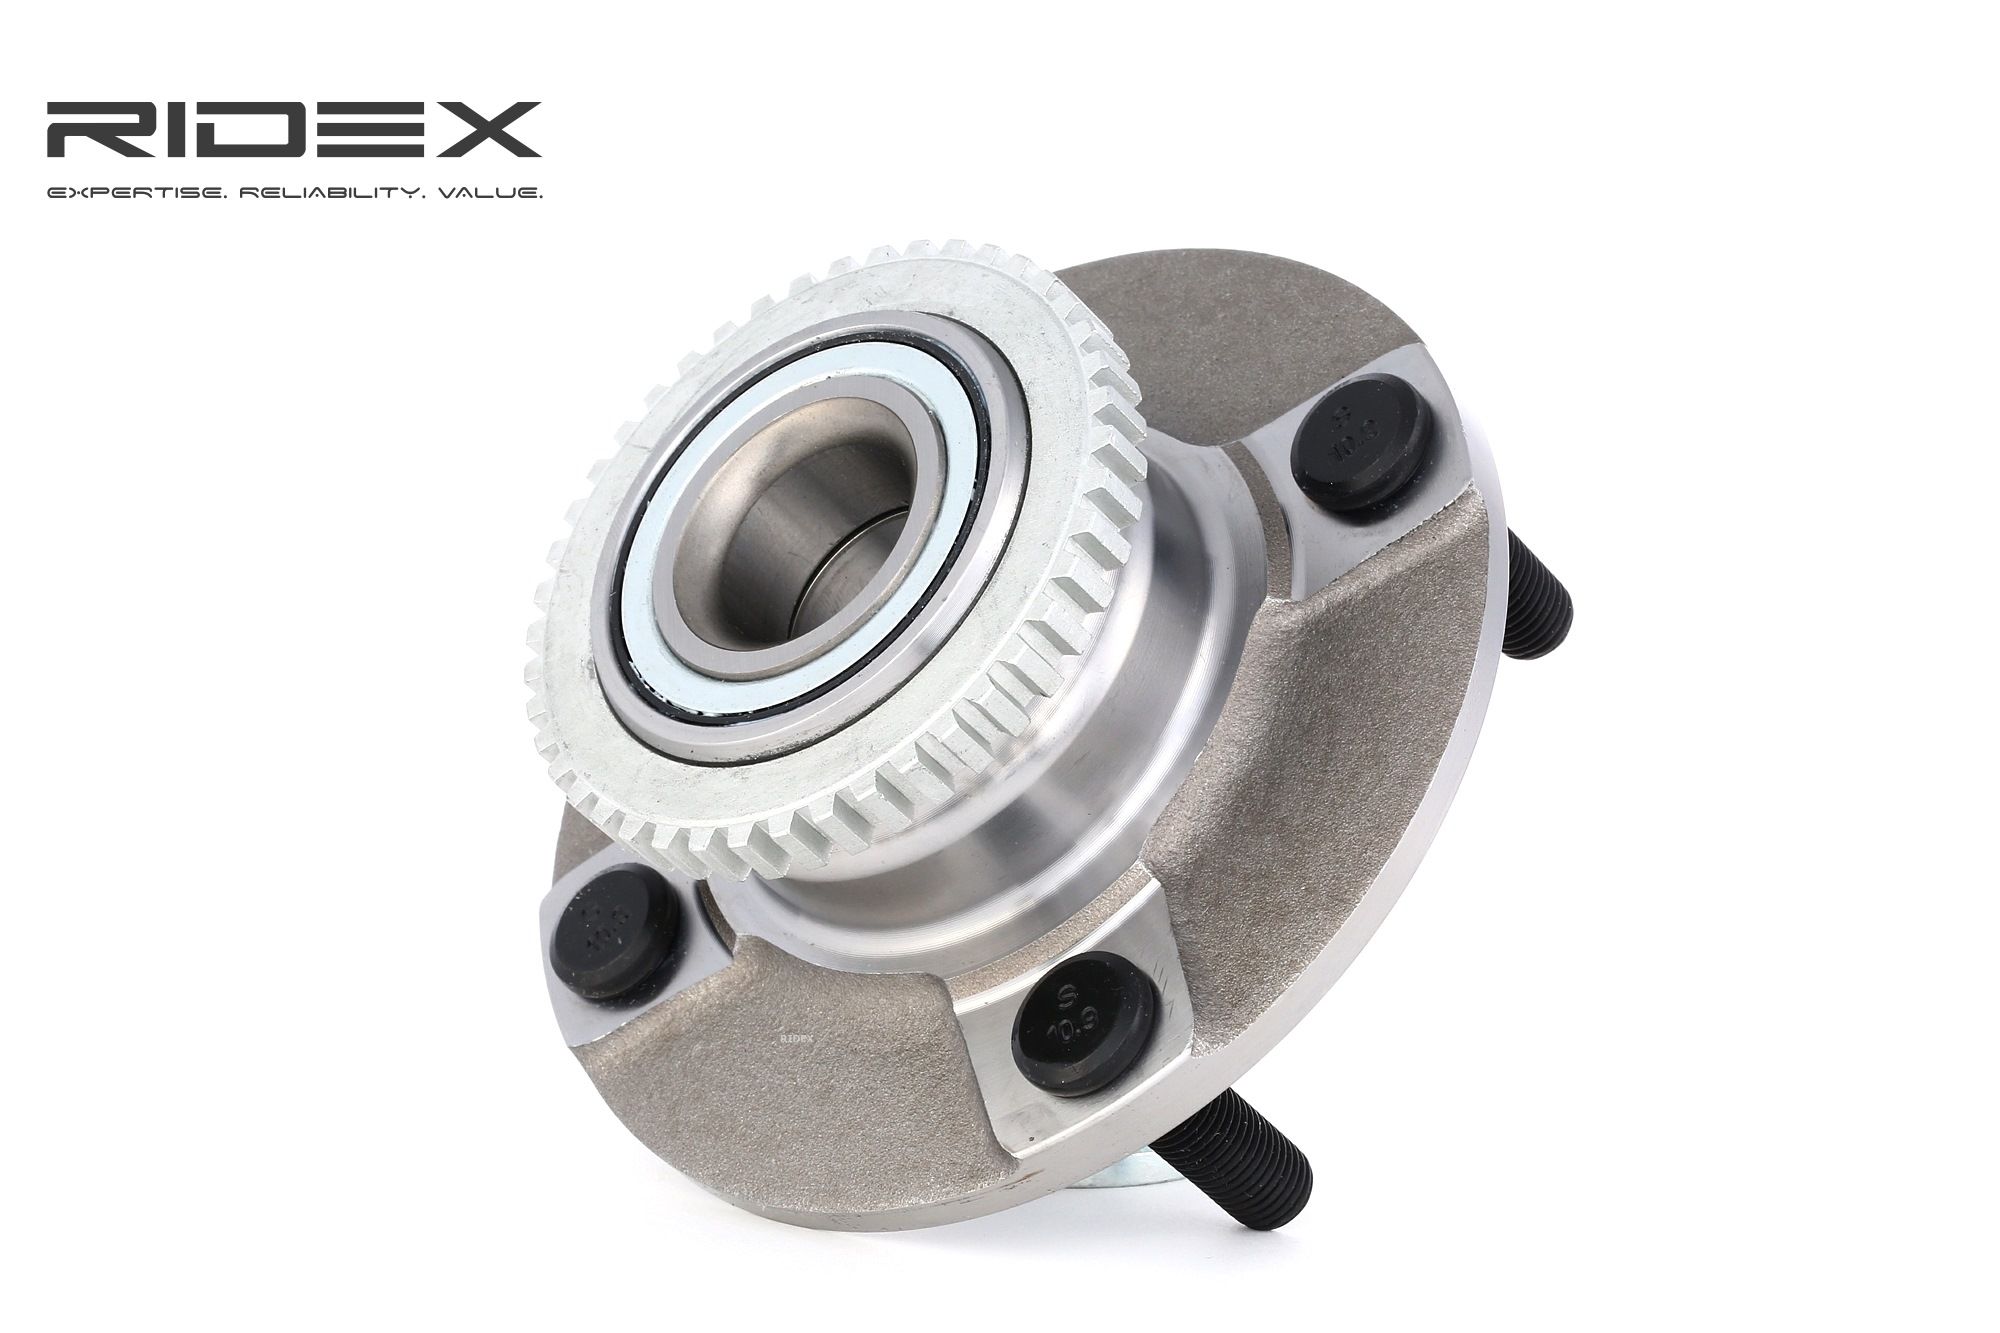 RIDEX 654W0581 Wheel bearing kit Rear Axle both sides, with ABS sensor ring, 139 mm